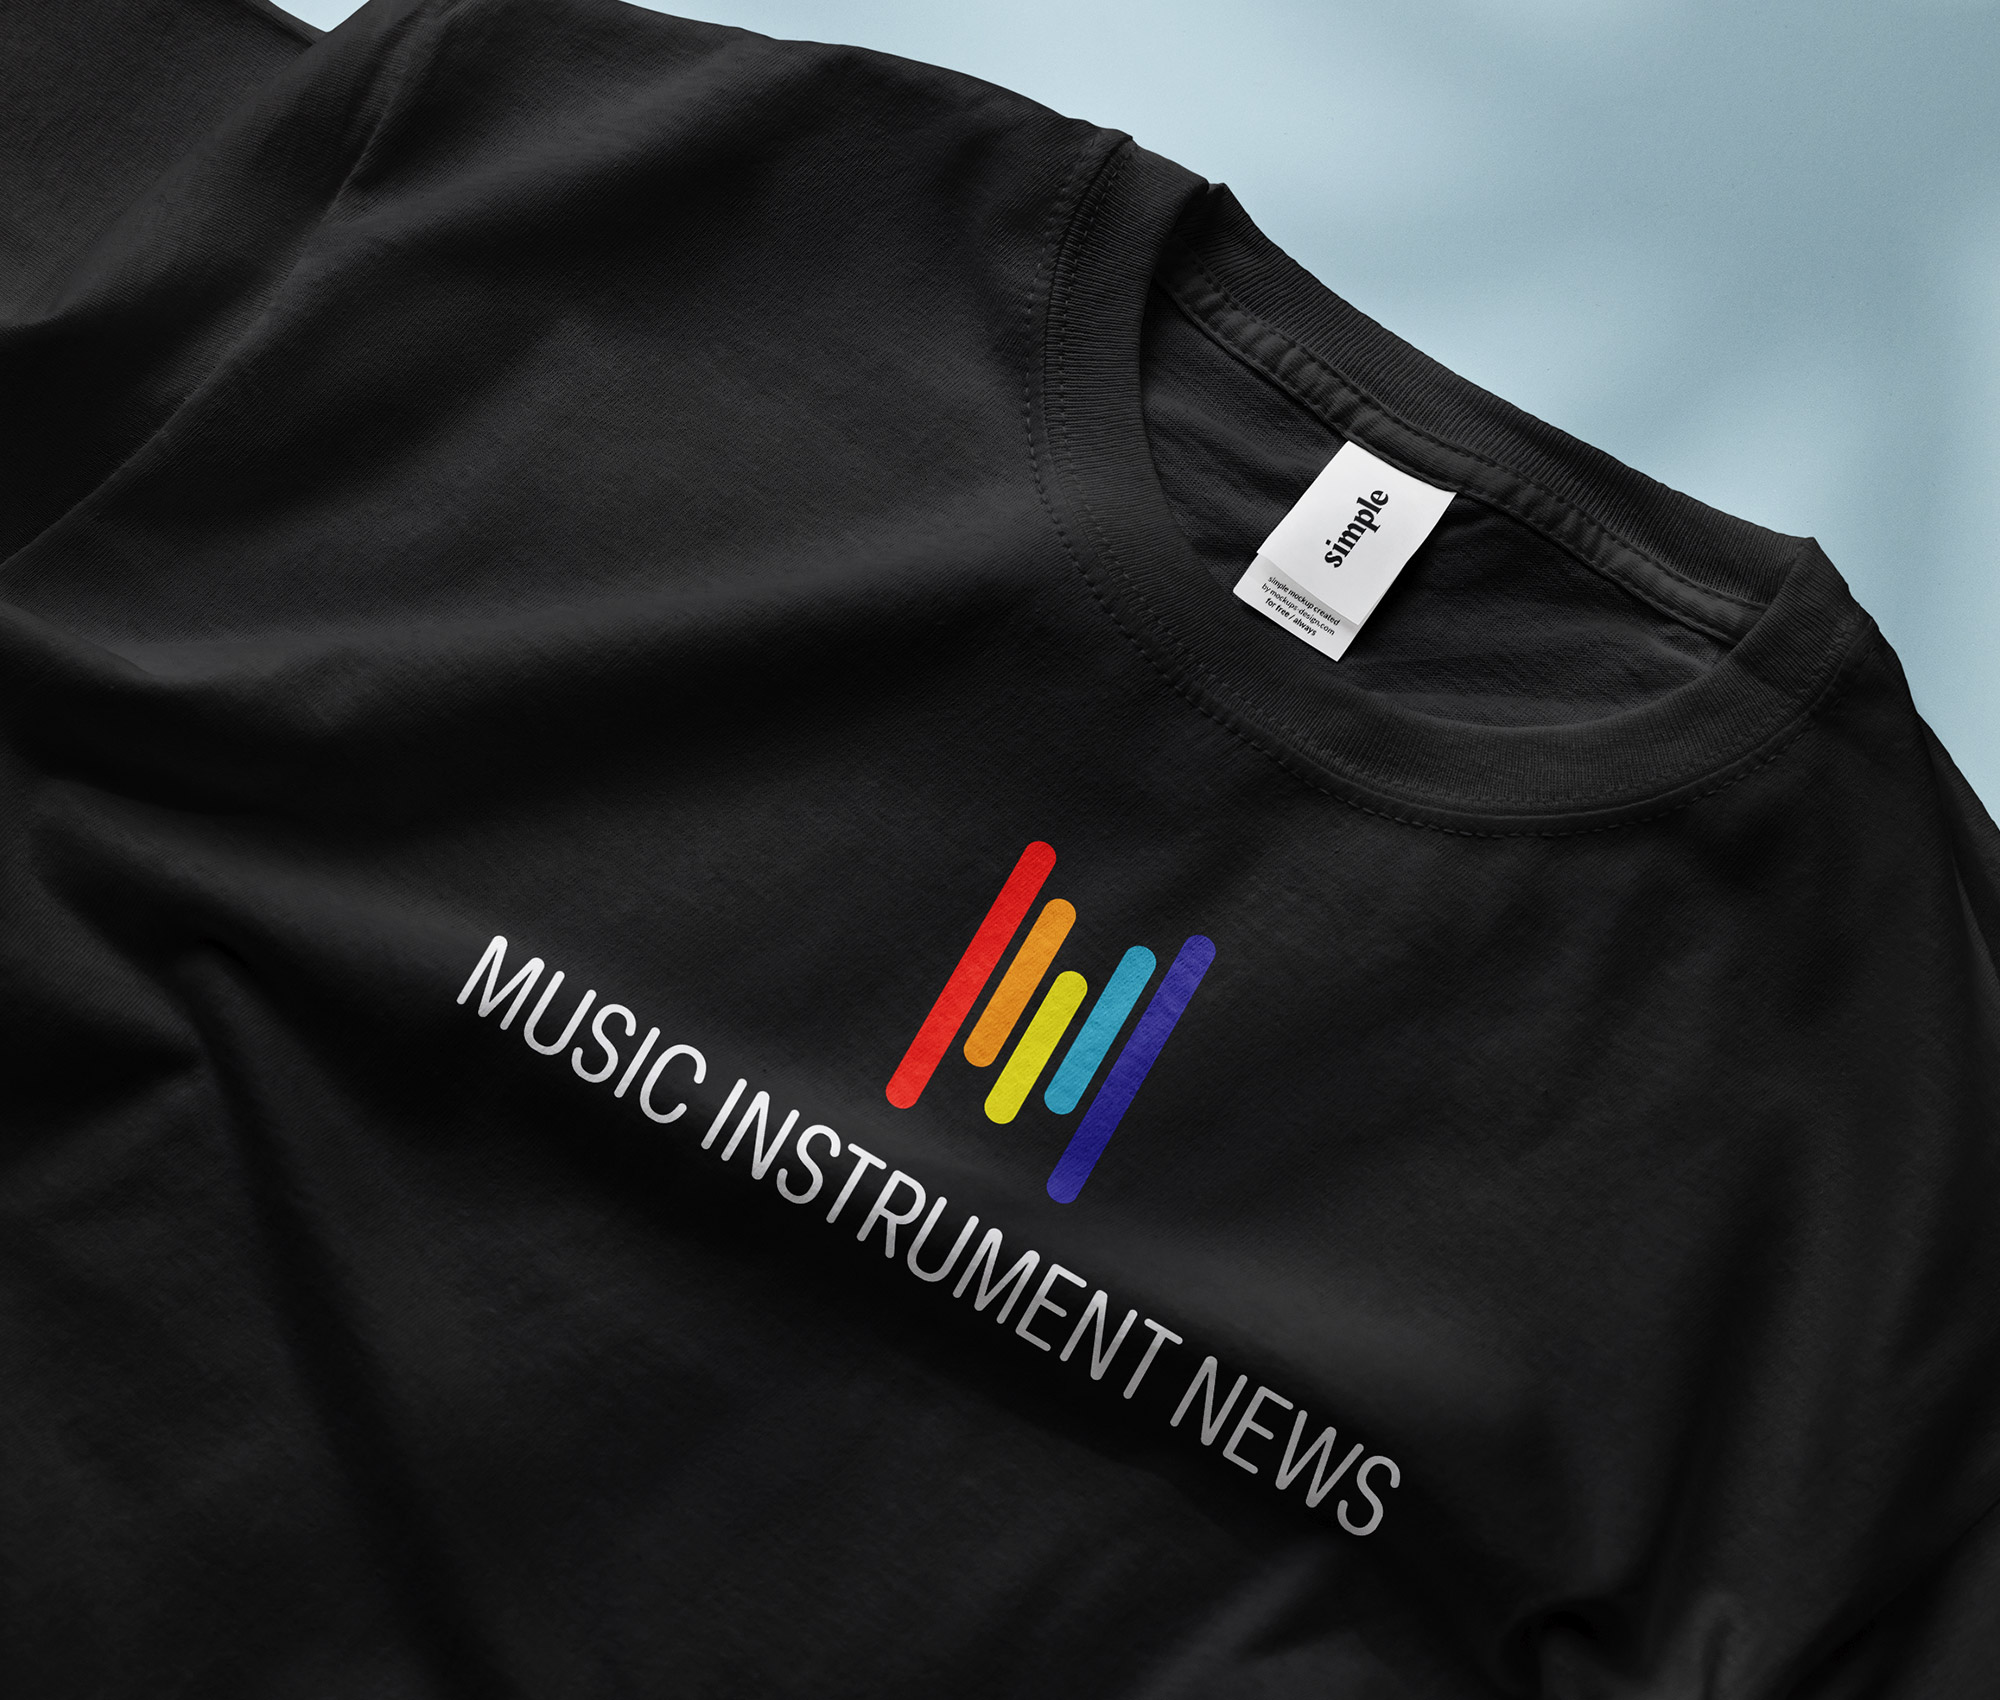 Music Instrument News Logo & Merchandise